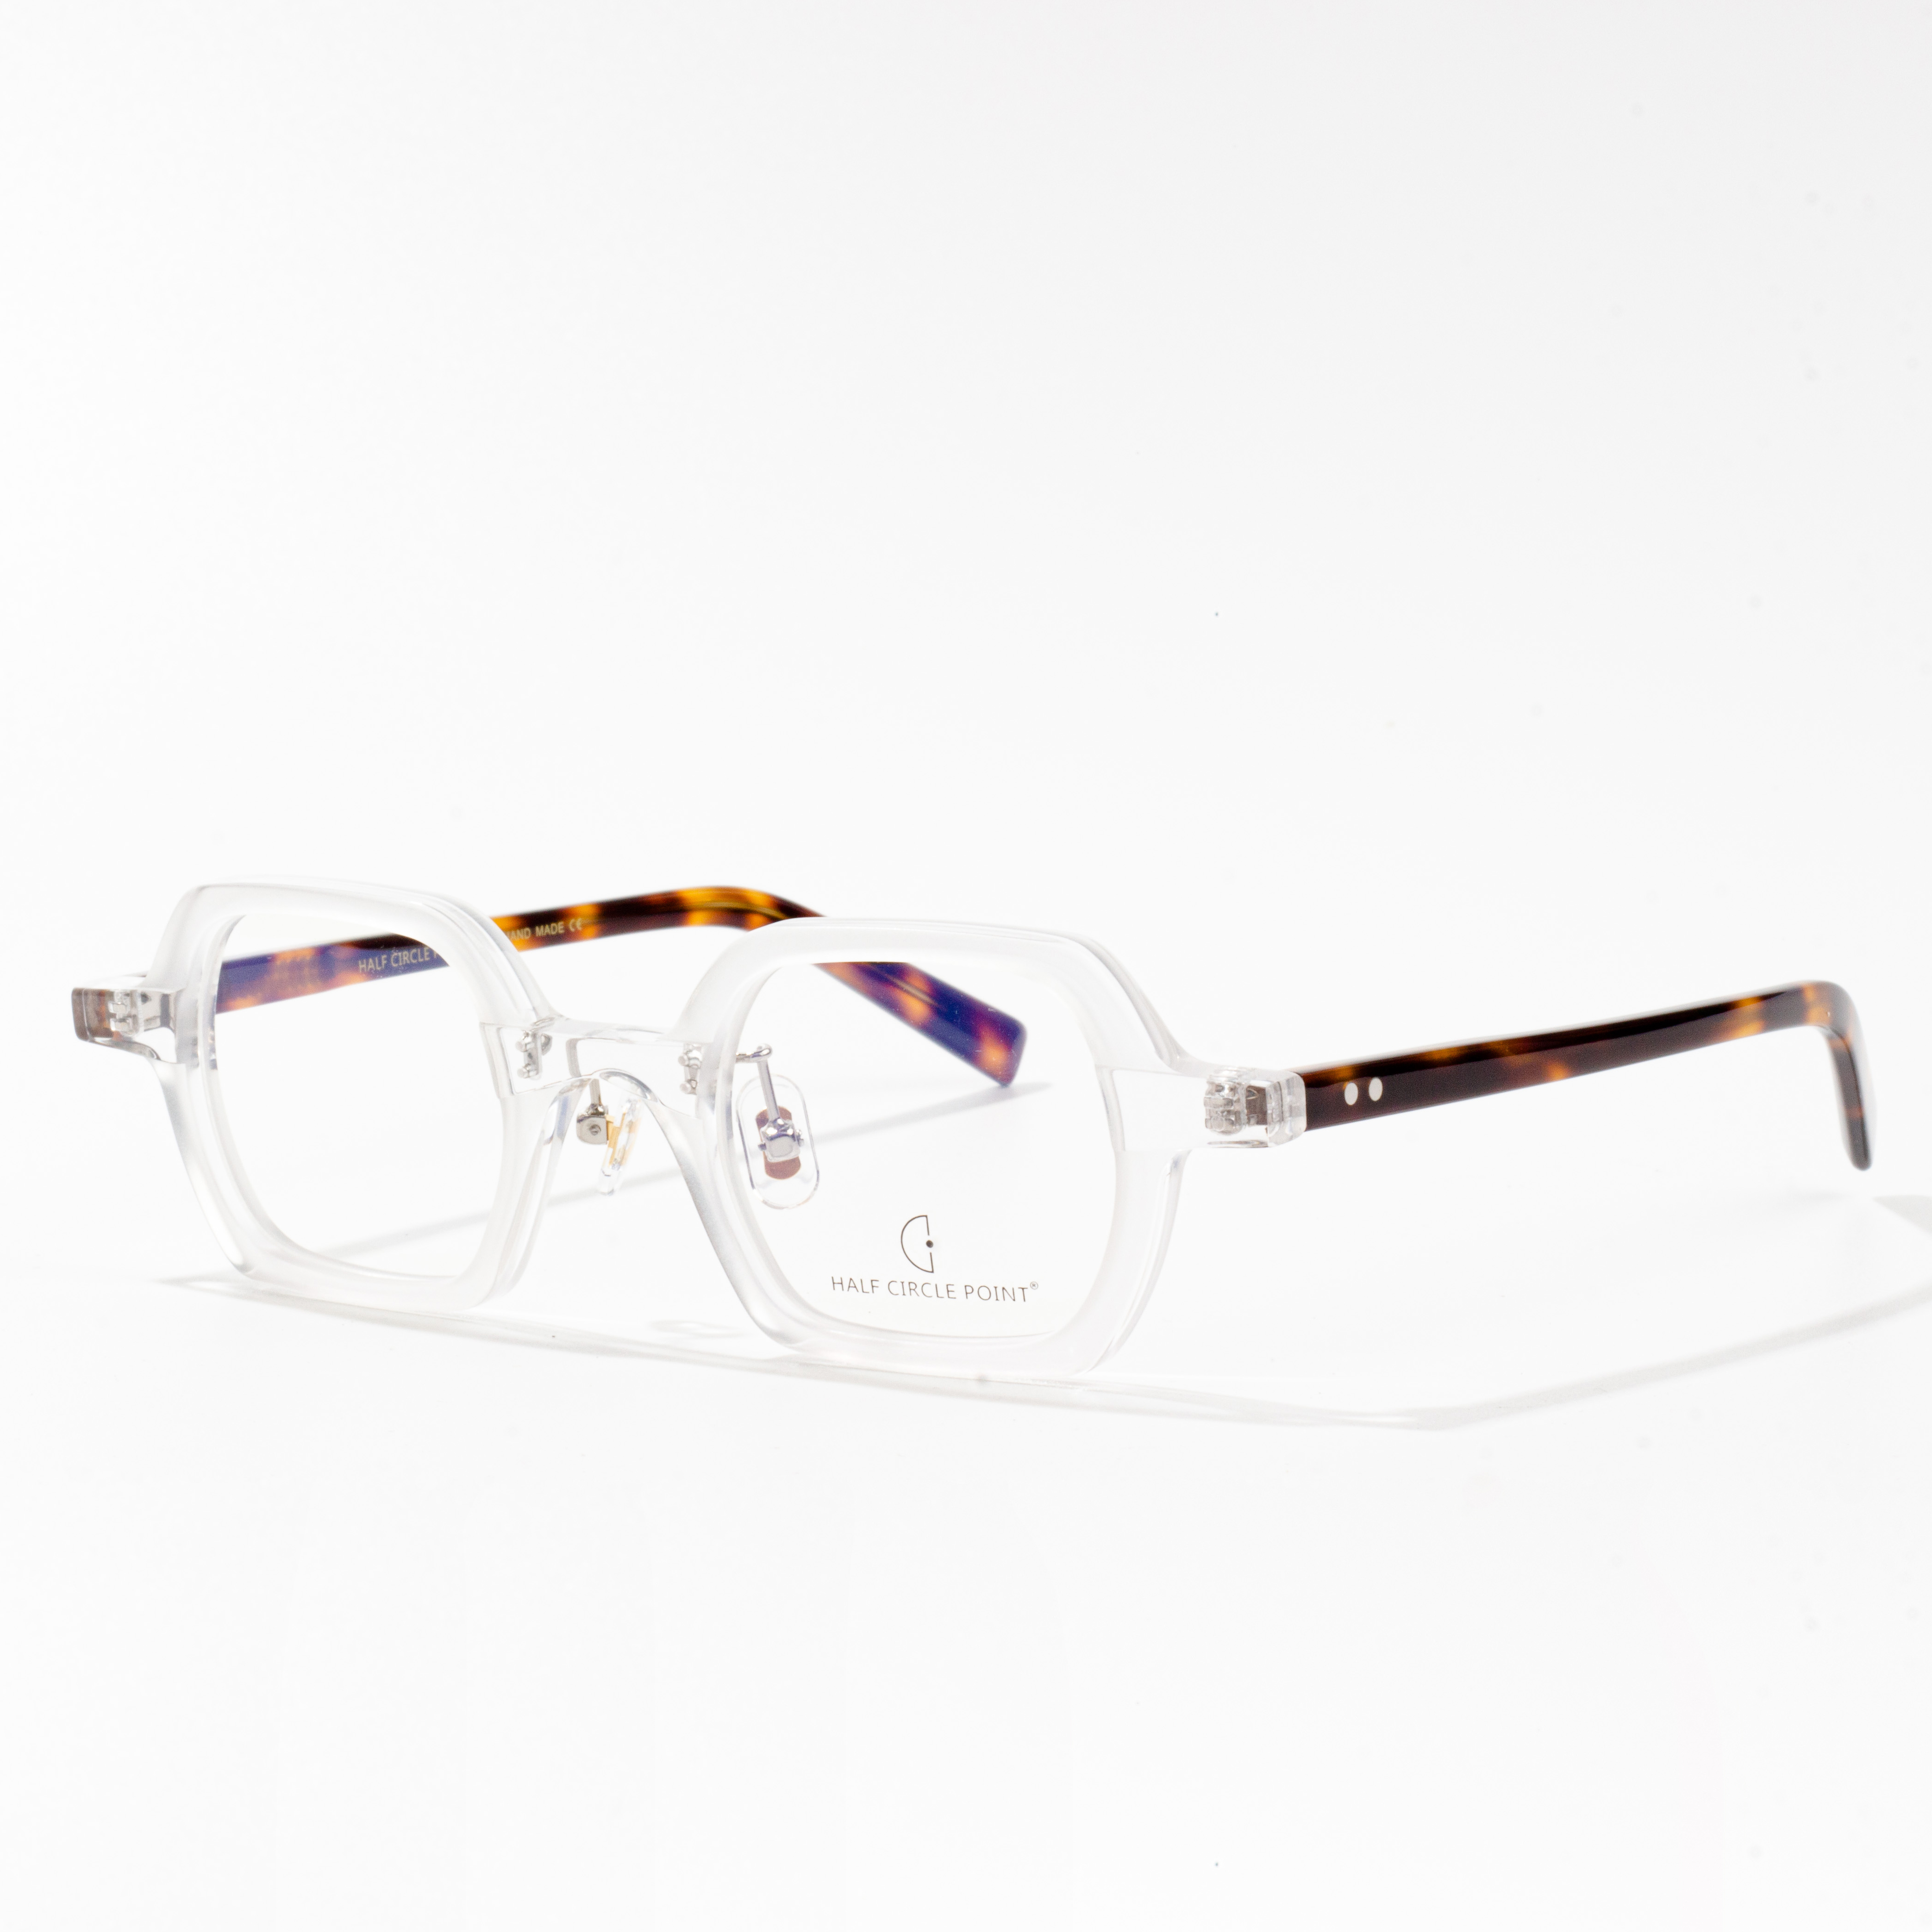 eyeglass frame manufacturers usa